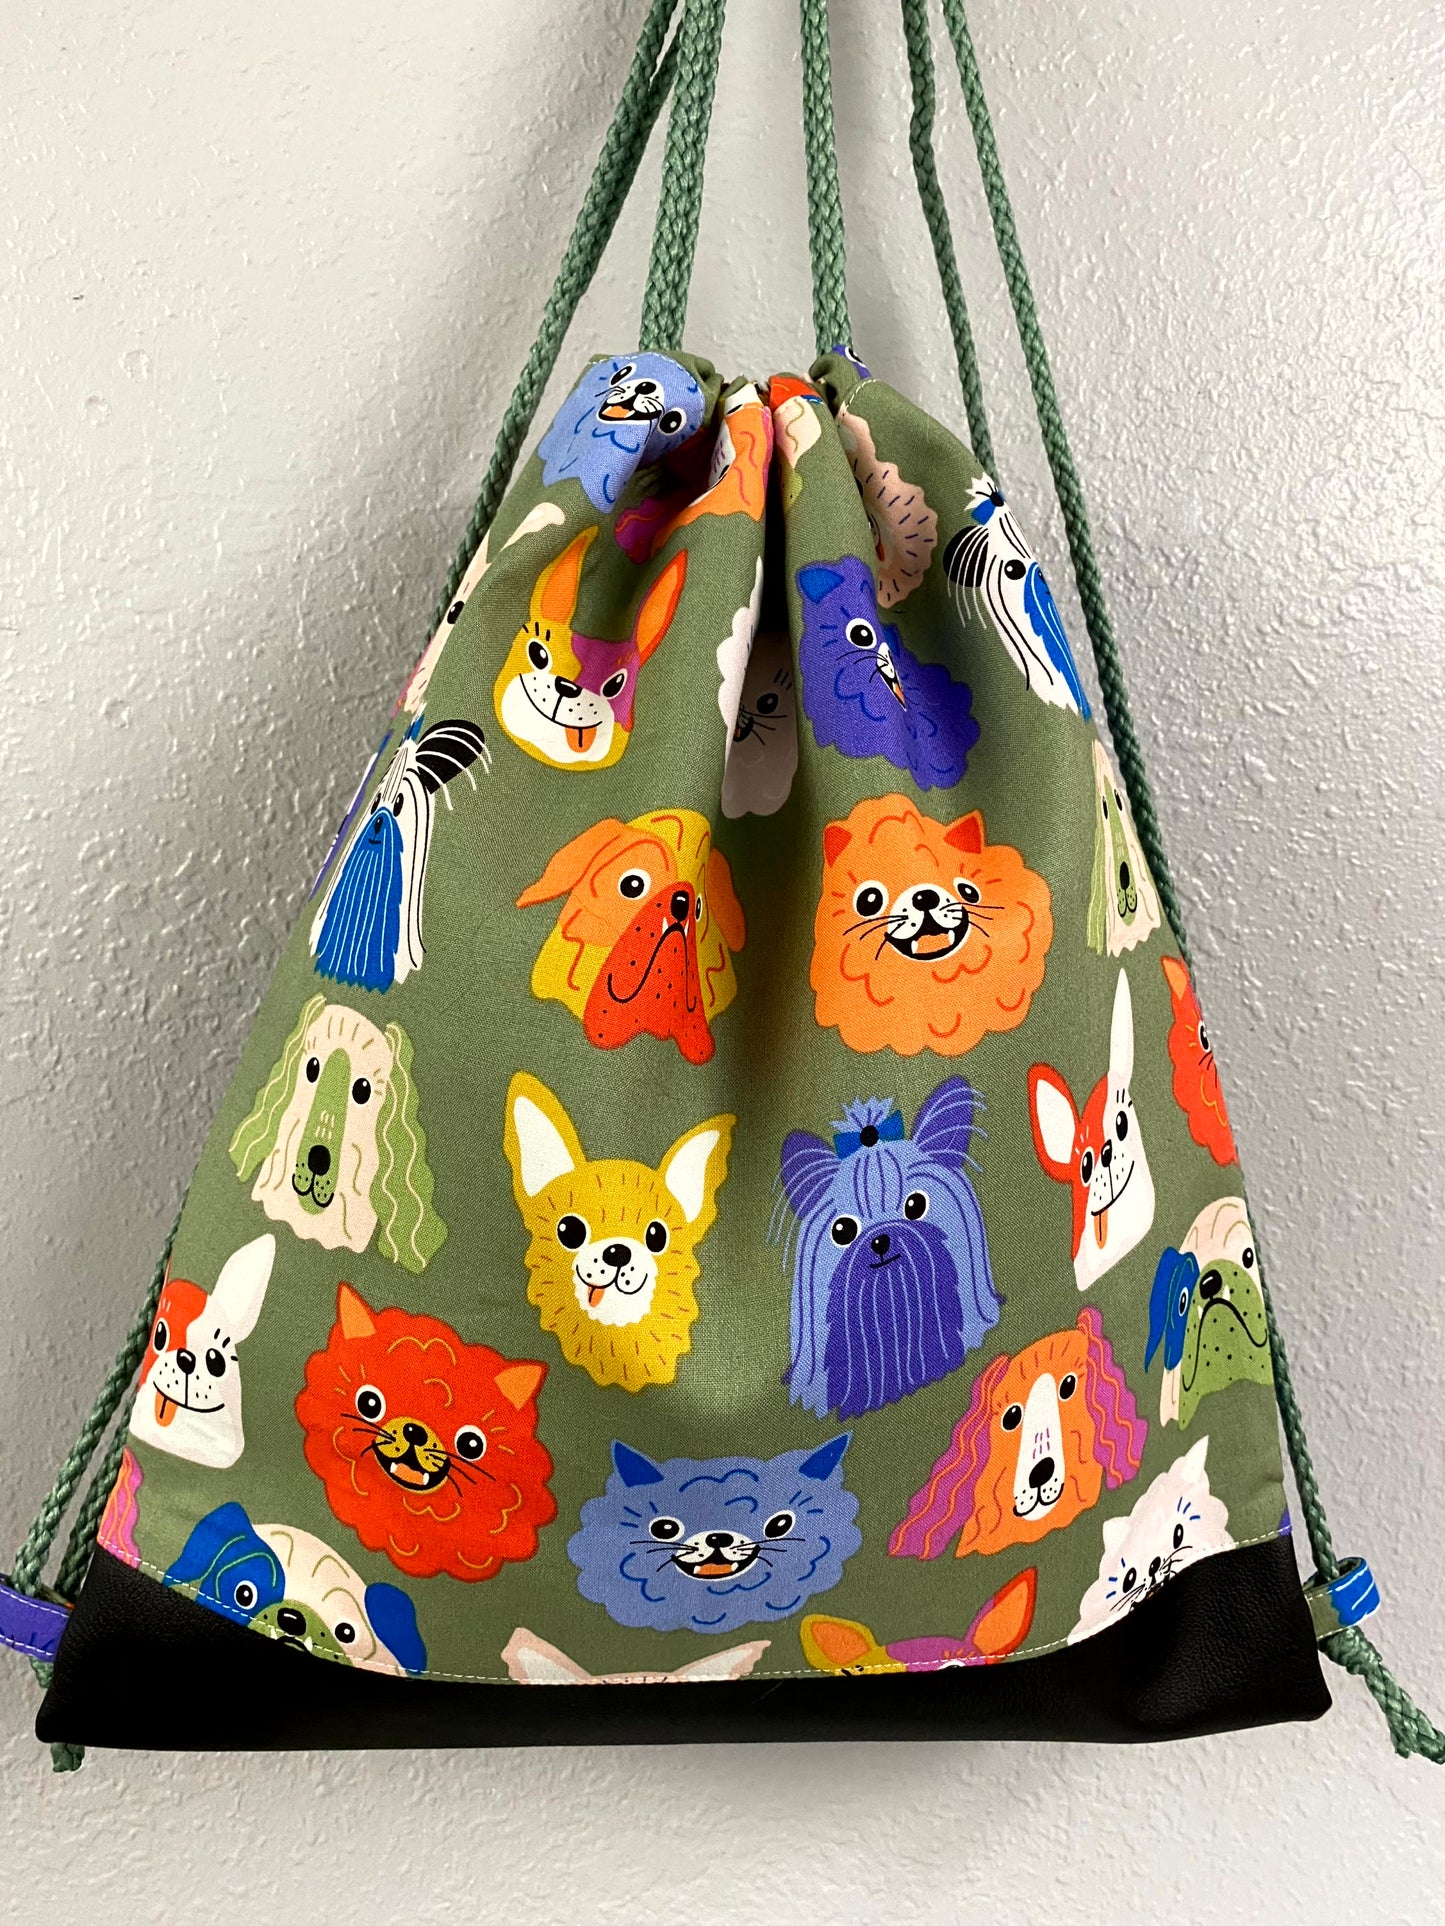 Dog Drawstring Bag - Handmade Drawstring Bag – Drawstring Backpack - On the Go Bag - Overnight Bag